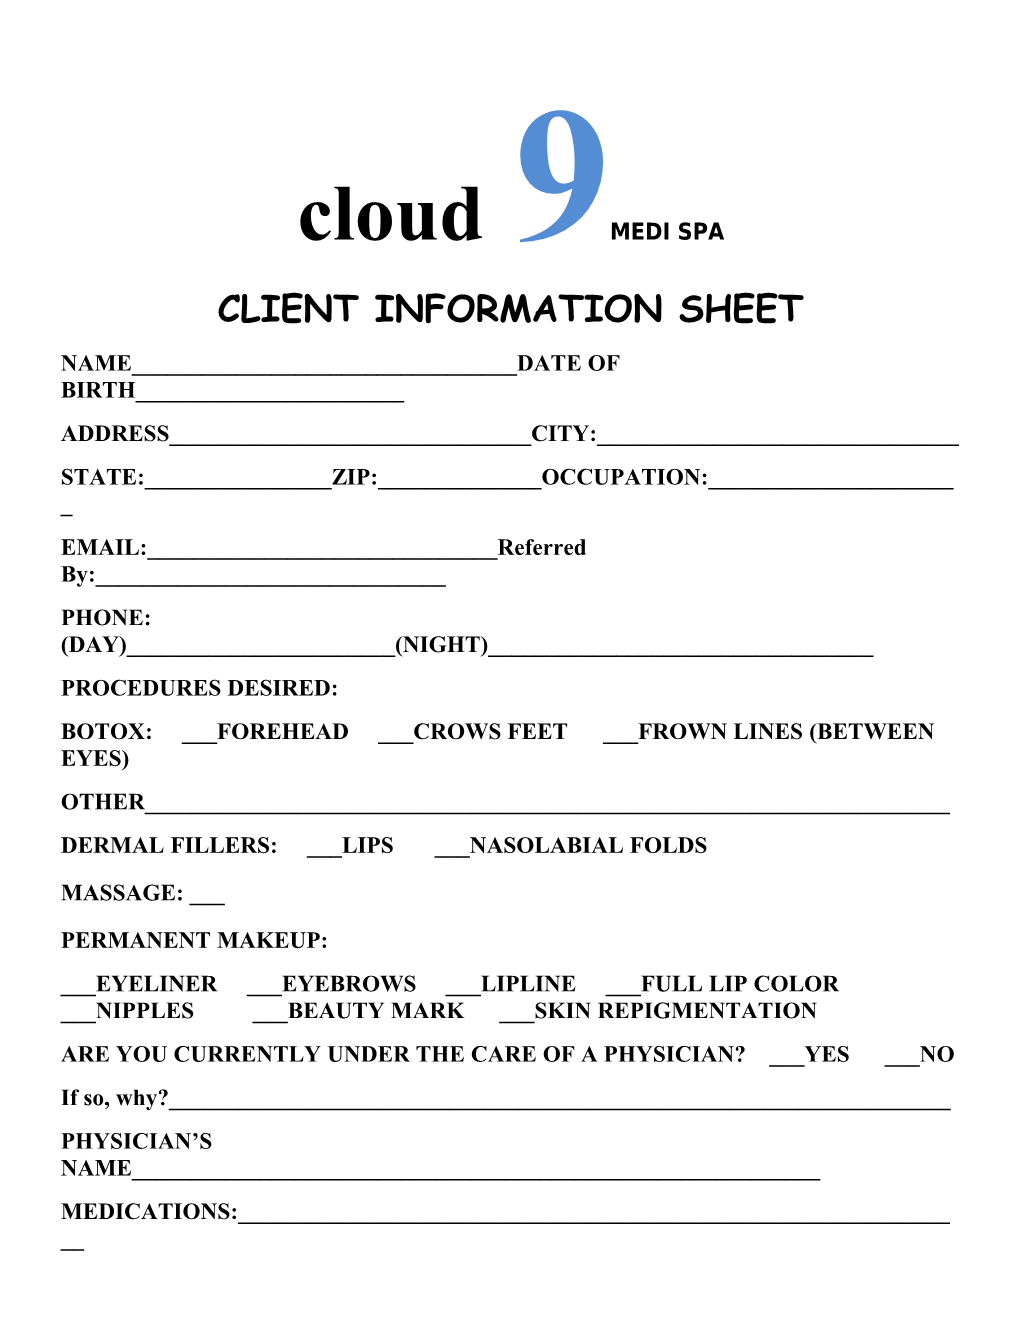 Client Information Sheet s1